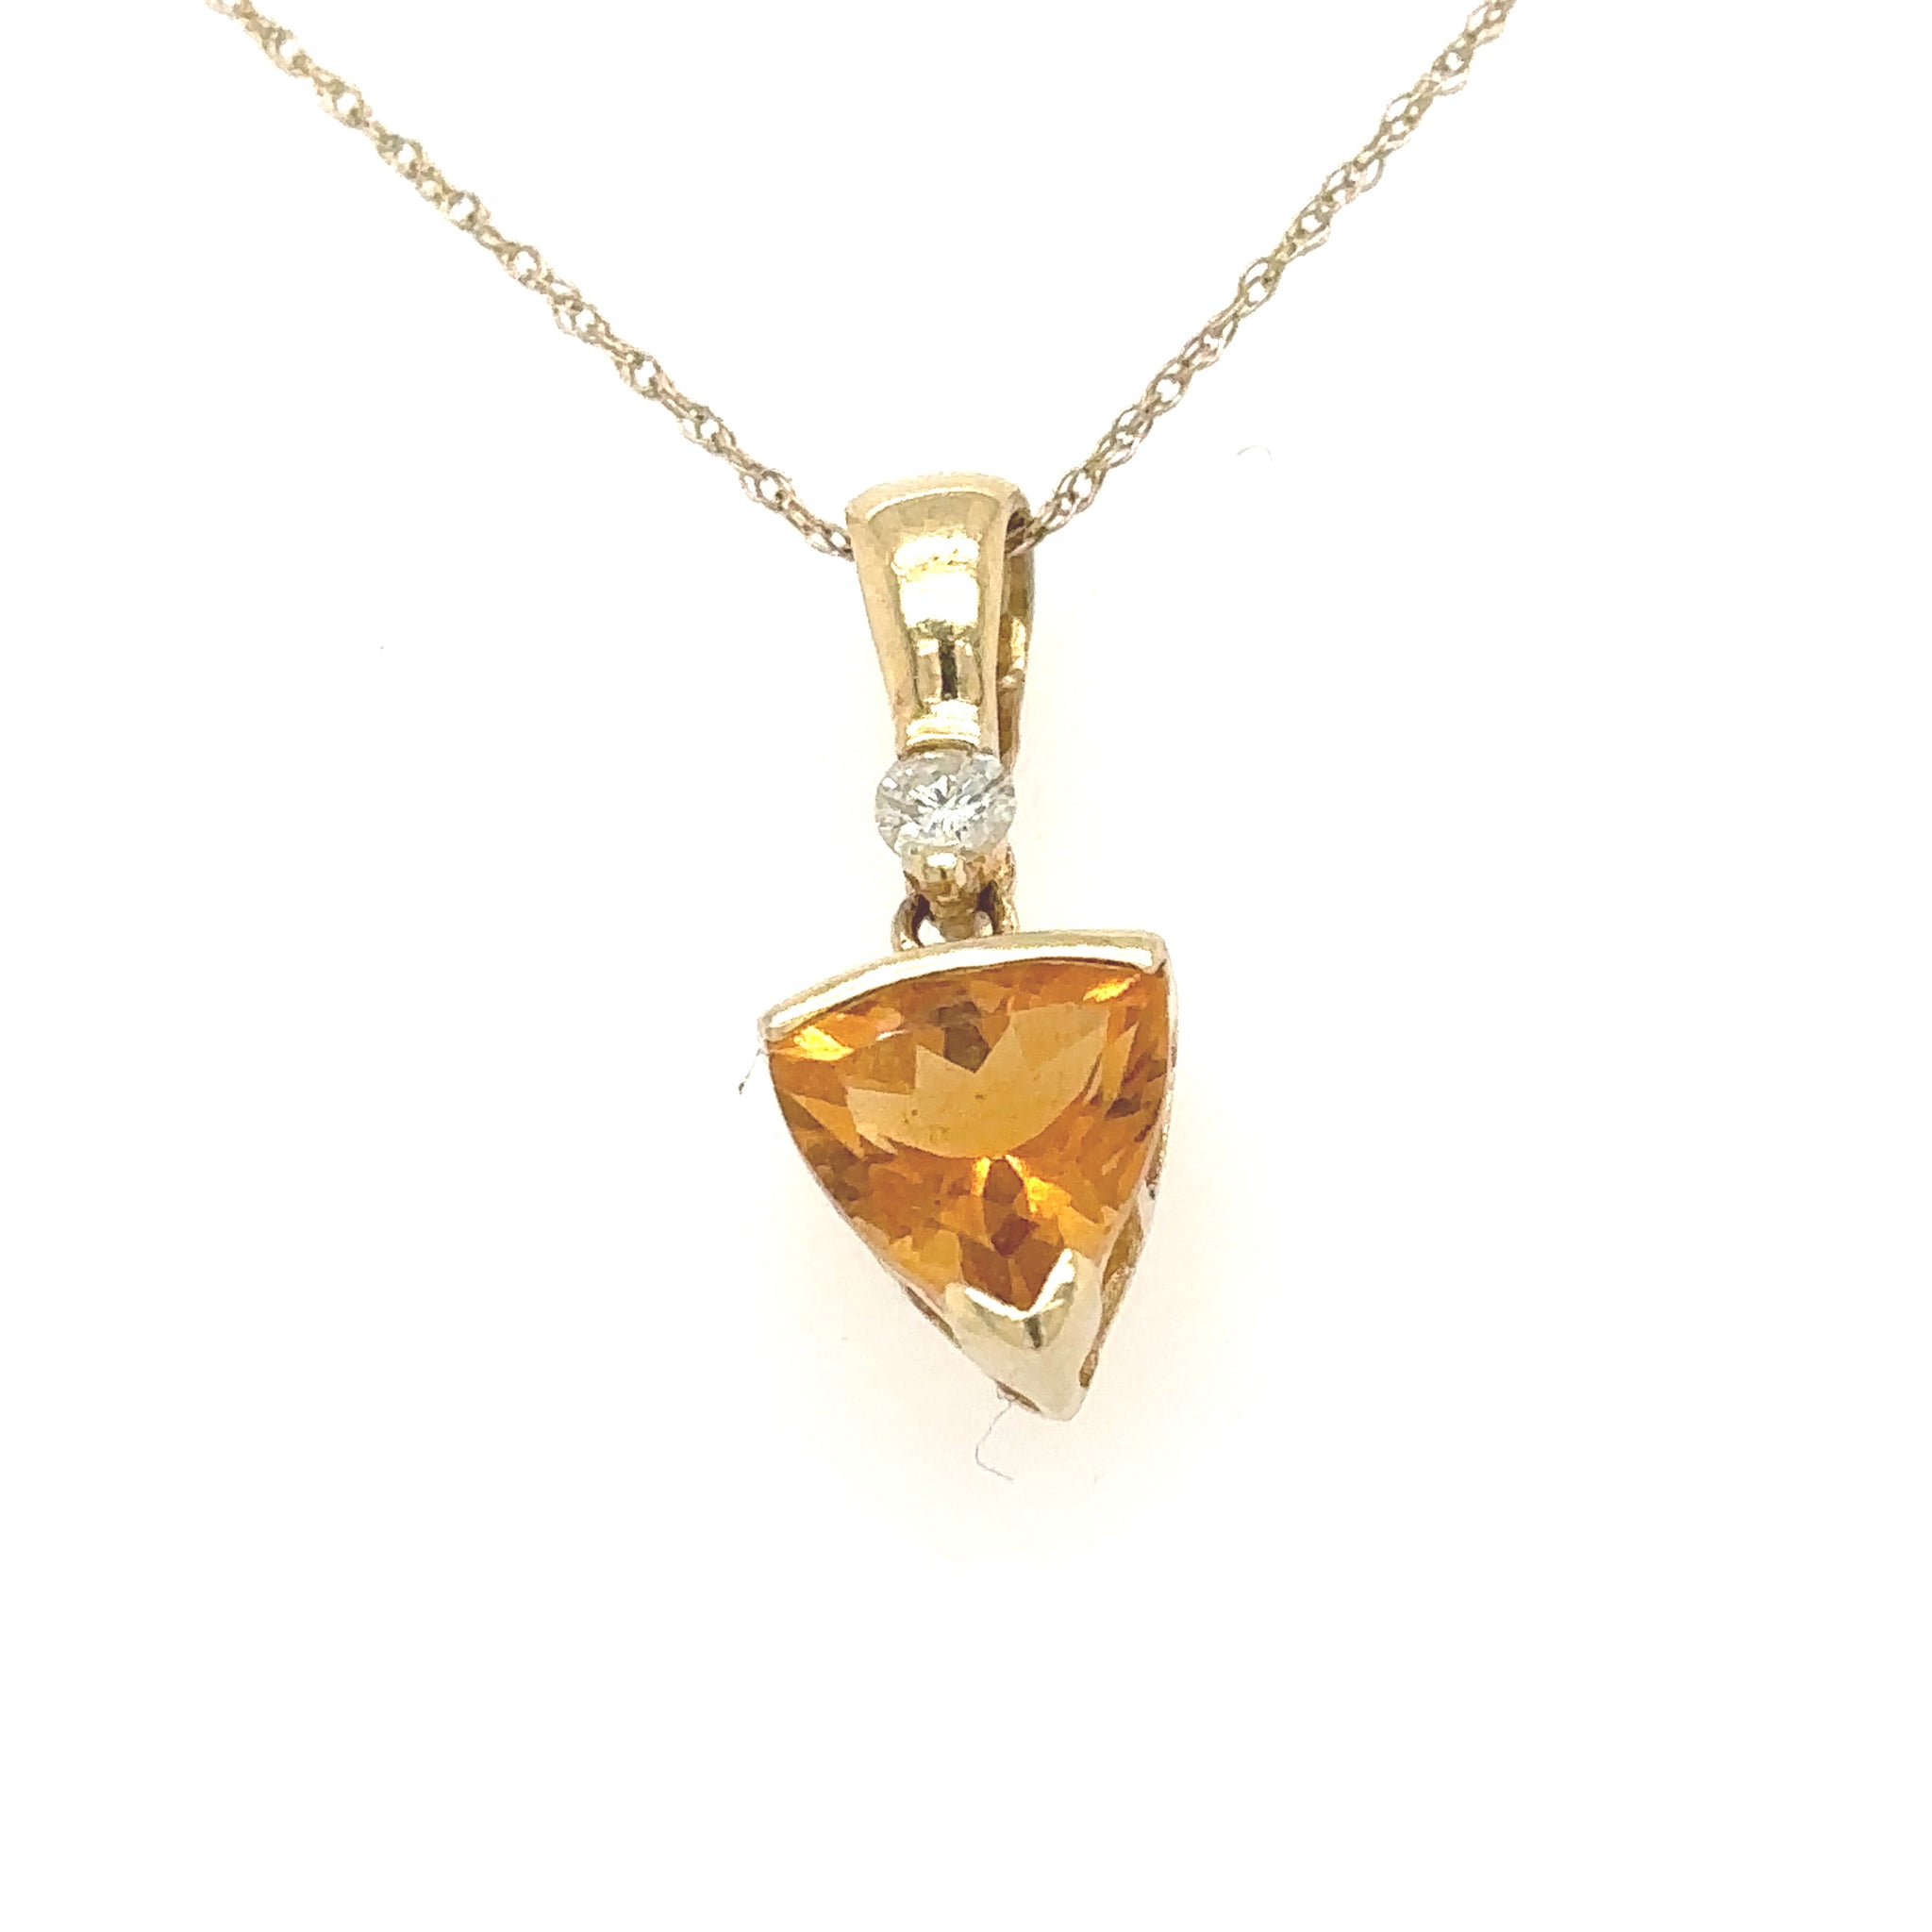 14K Yellow Gold Citrine and Diamond Pendant Necklace 18"